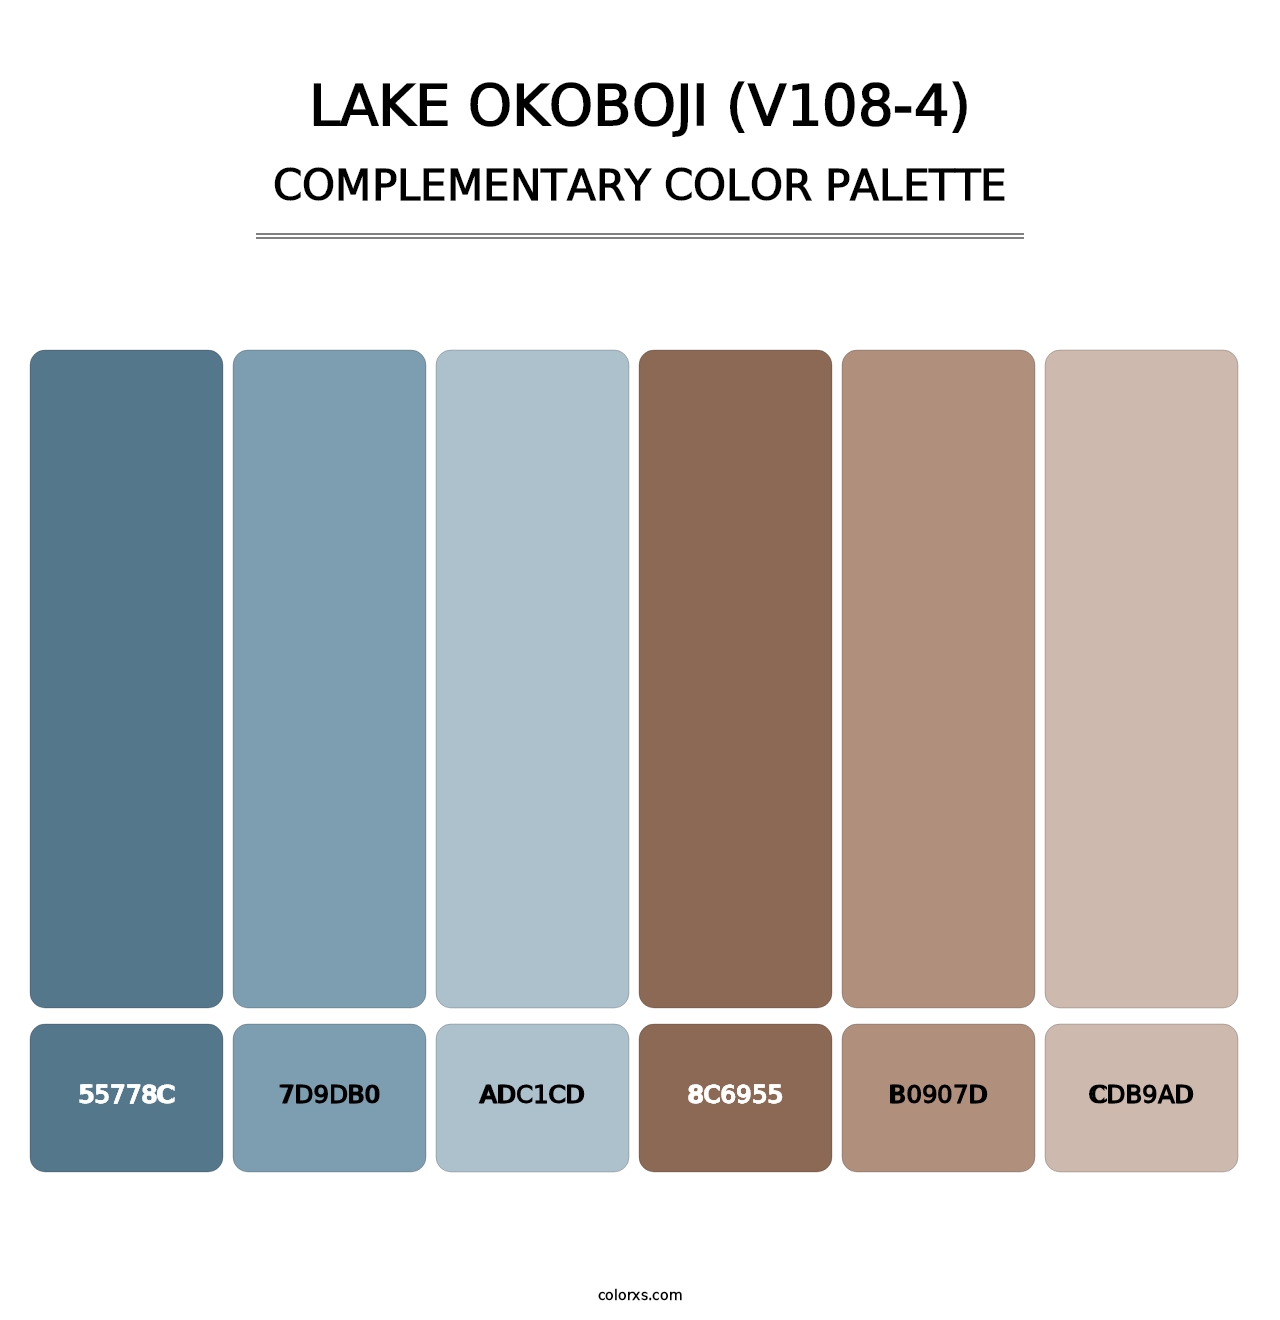 Lake Okoboji (V108-4) - Complementary Color Palette